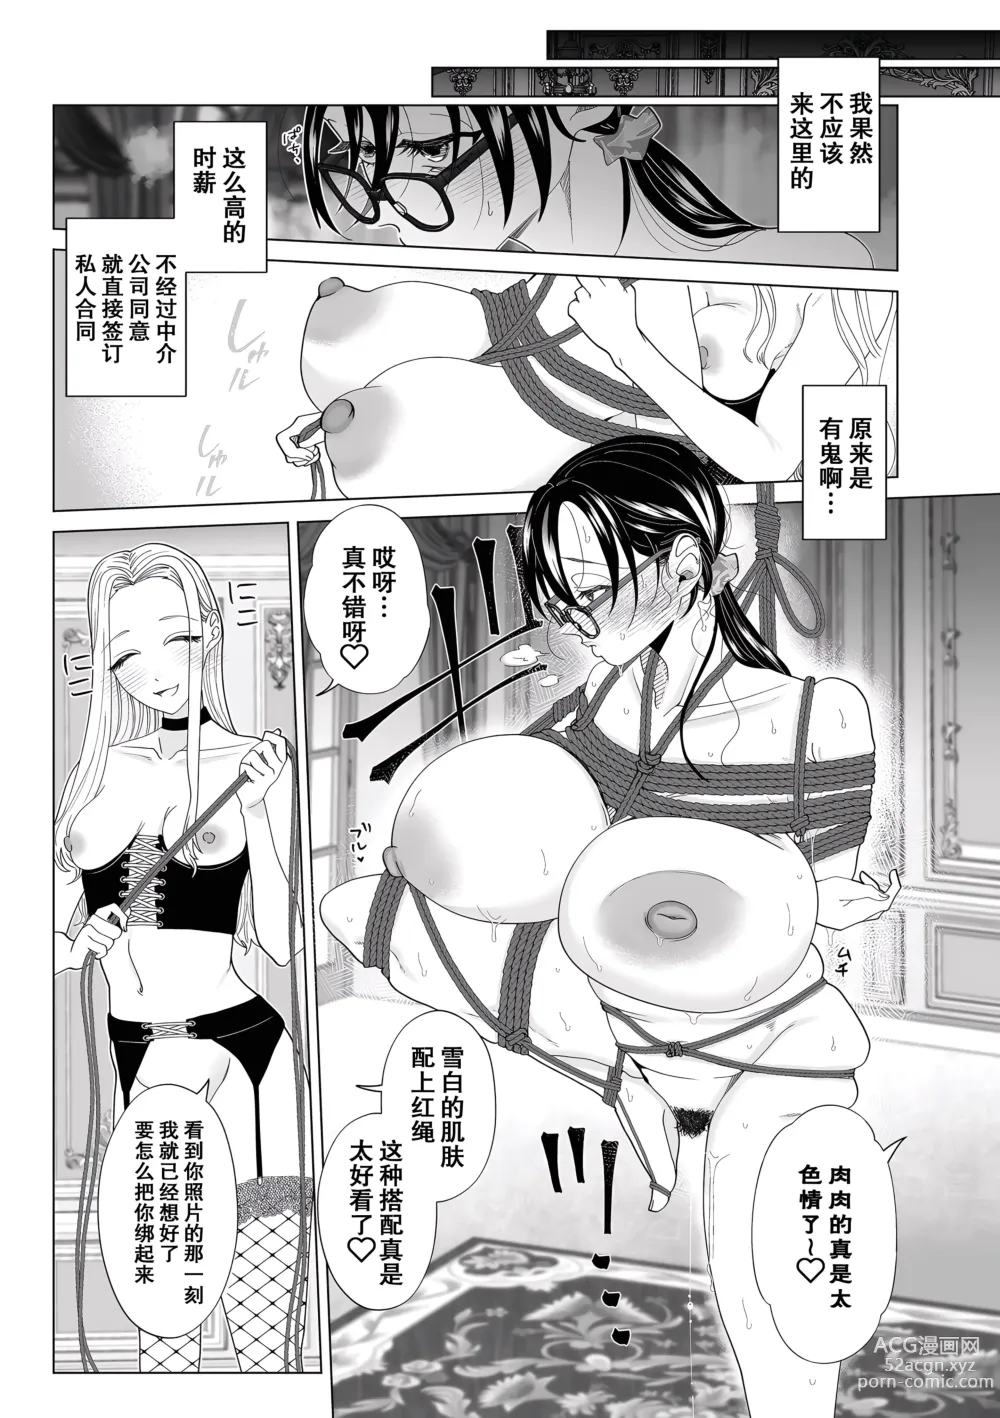 Page 8 of manga Torawarete